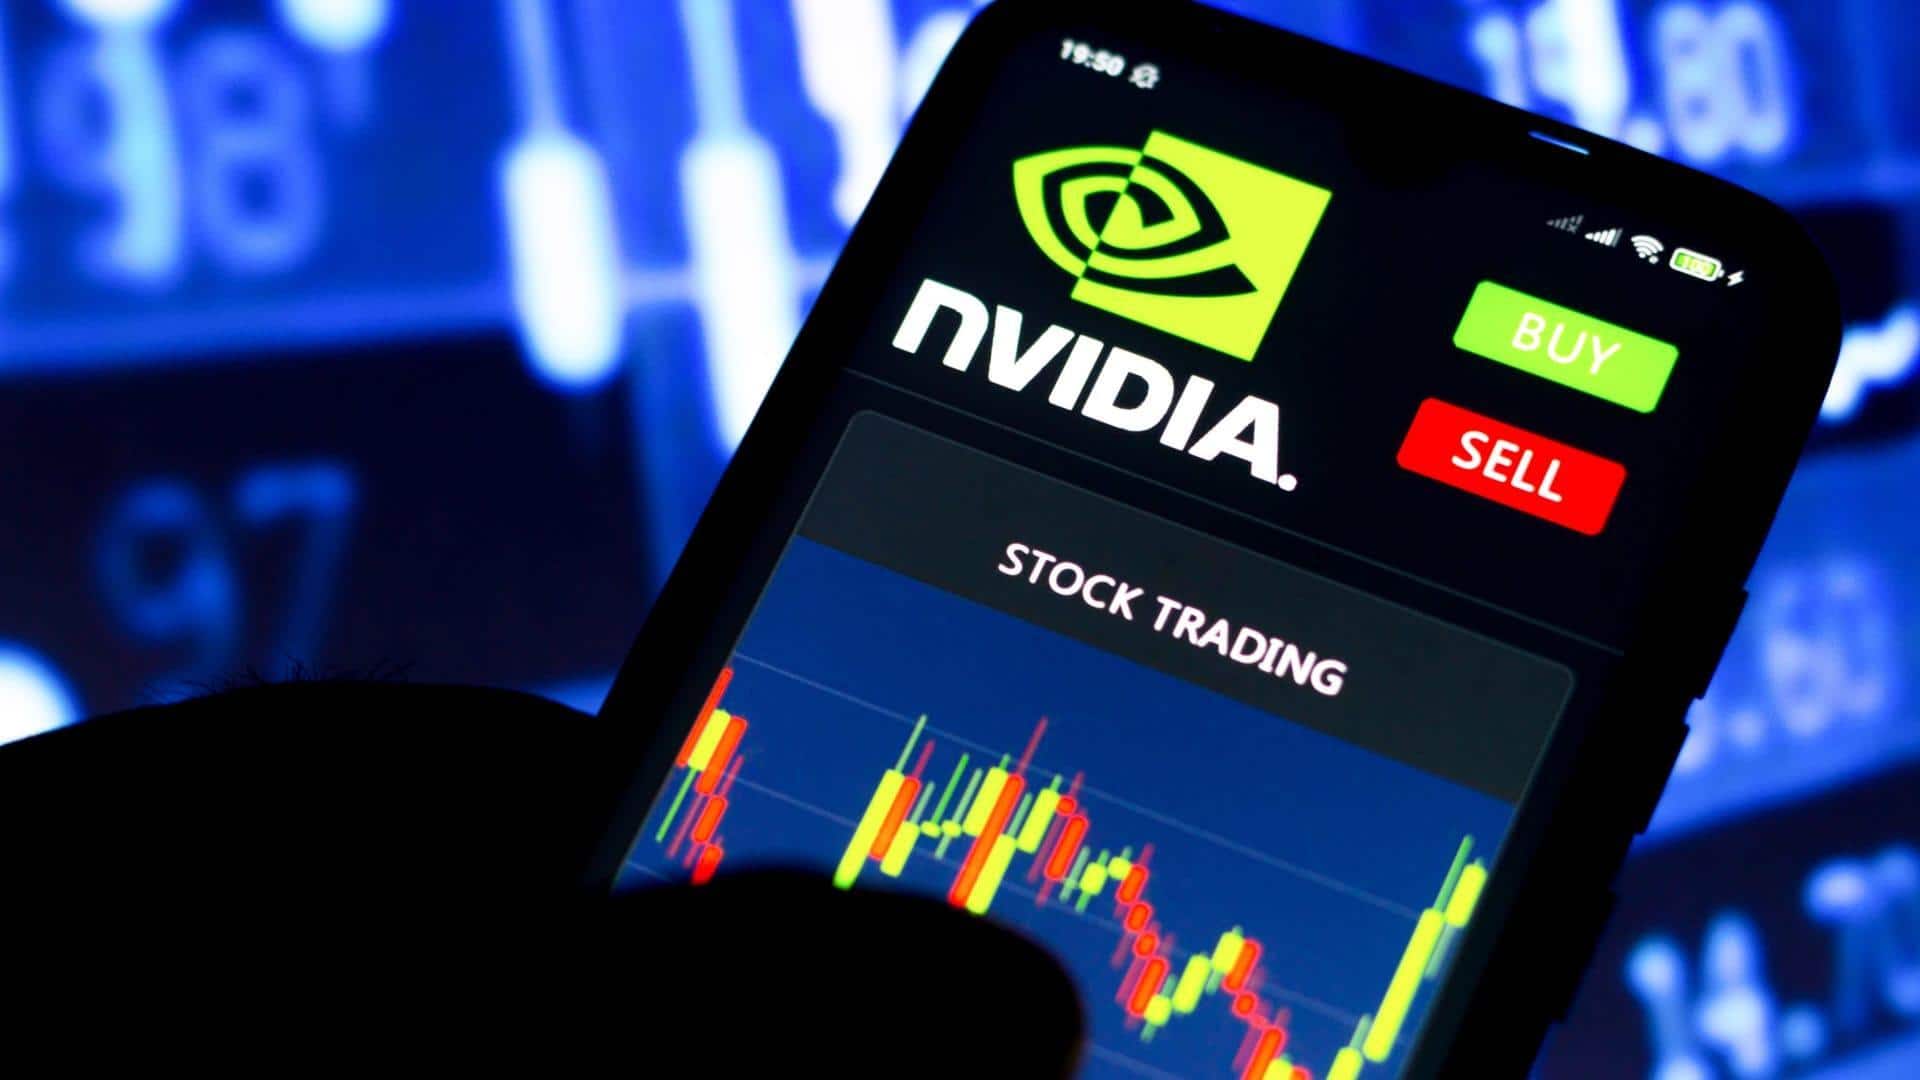 NVIDIA stock split might spur trend in tech industry: BofA